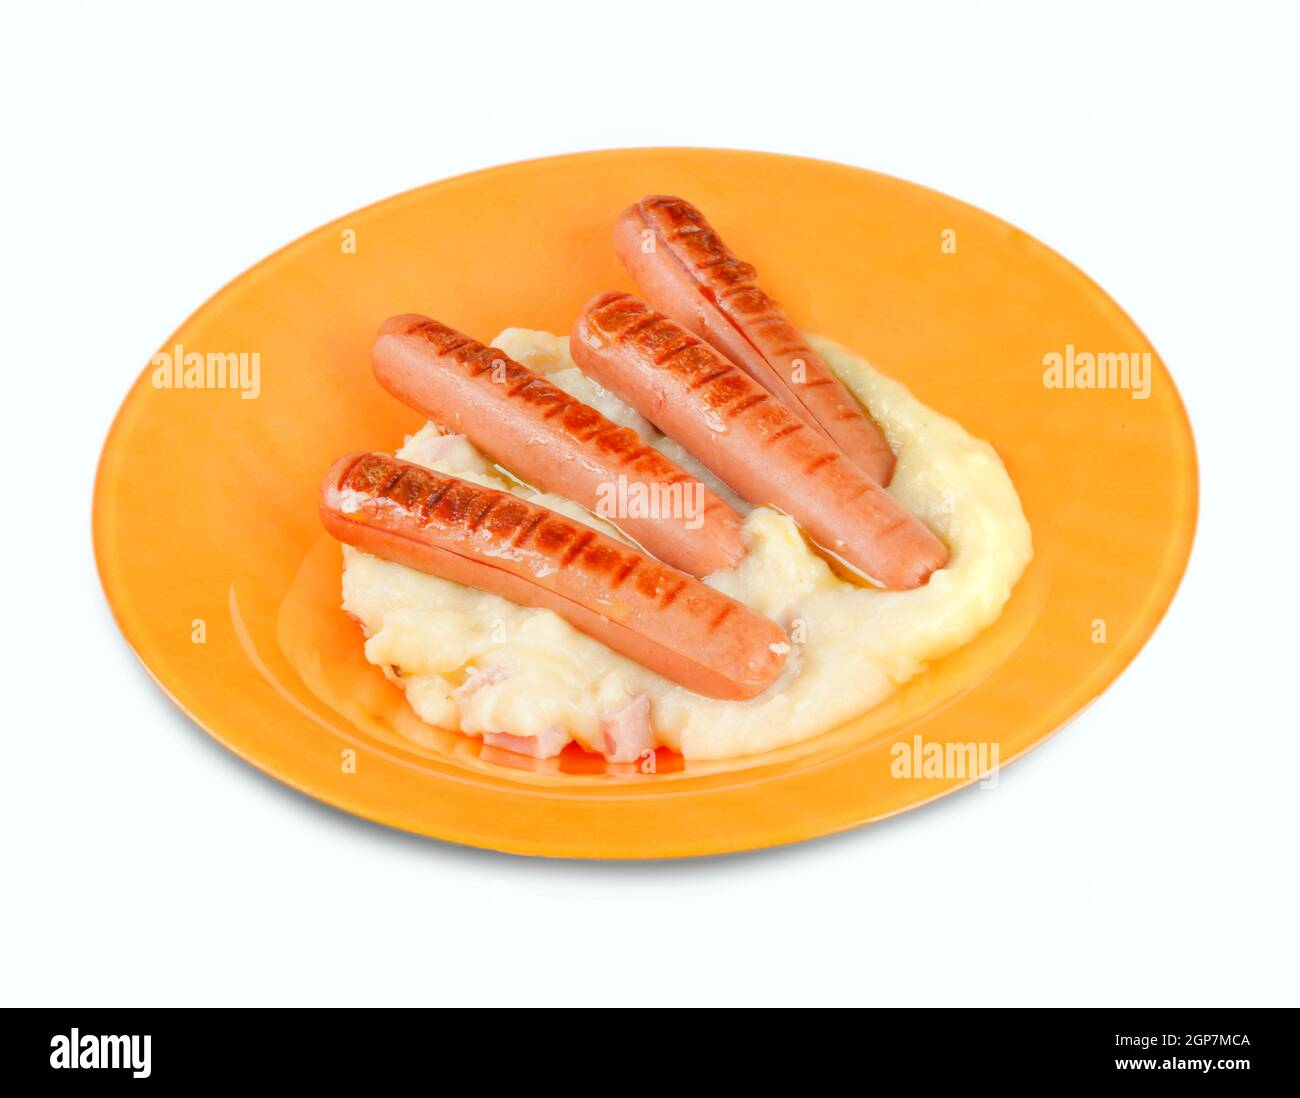 Sausages with mashed potato in orange flat Stock Photo - Alamy